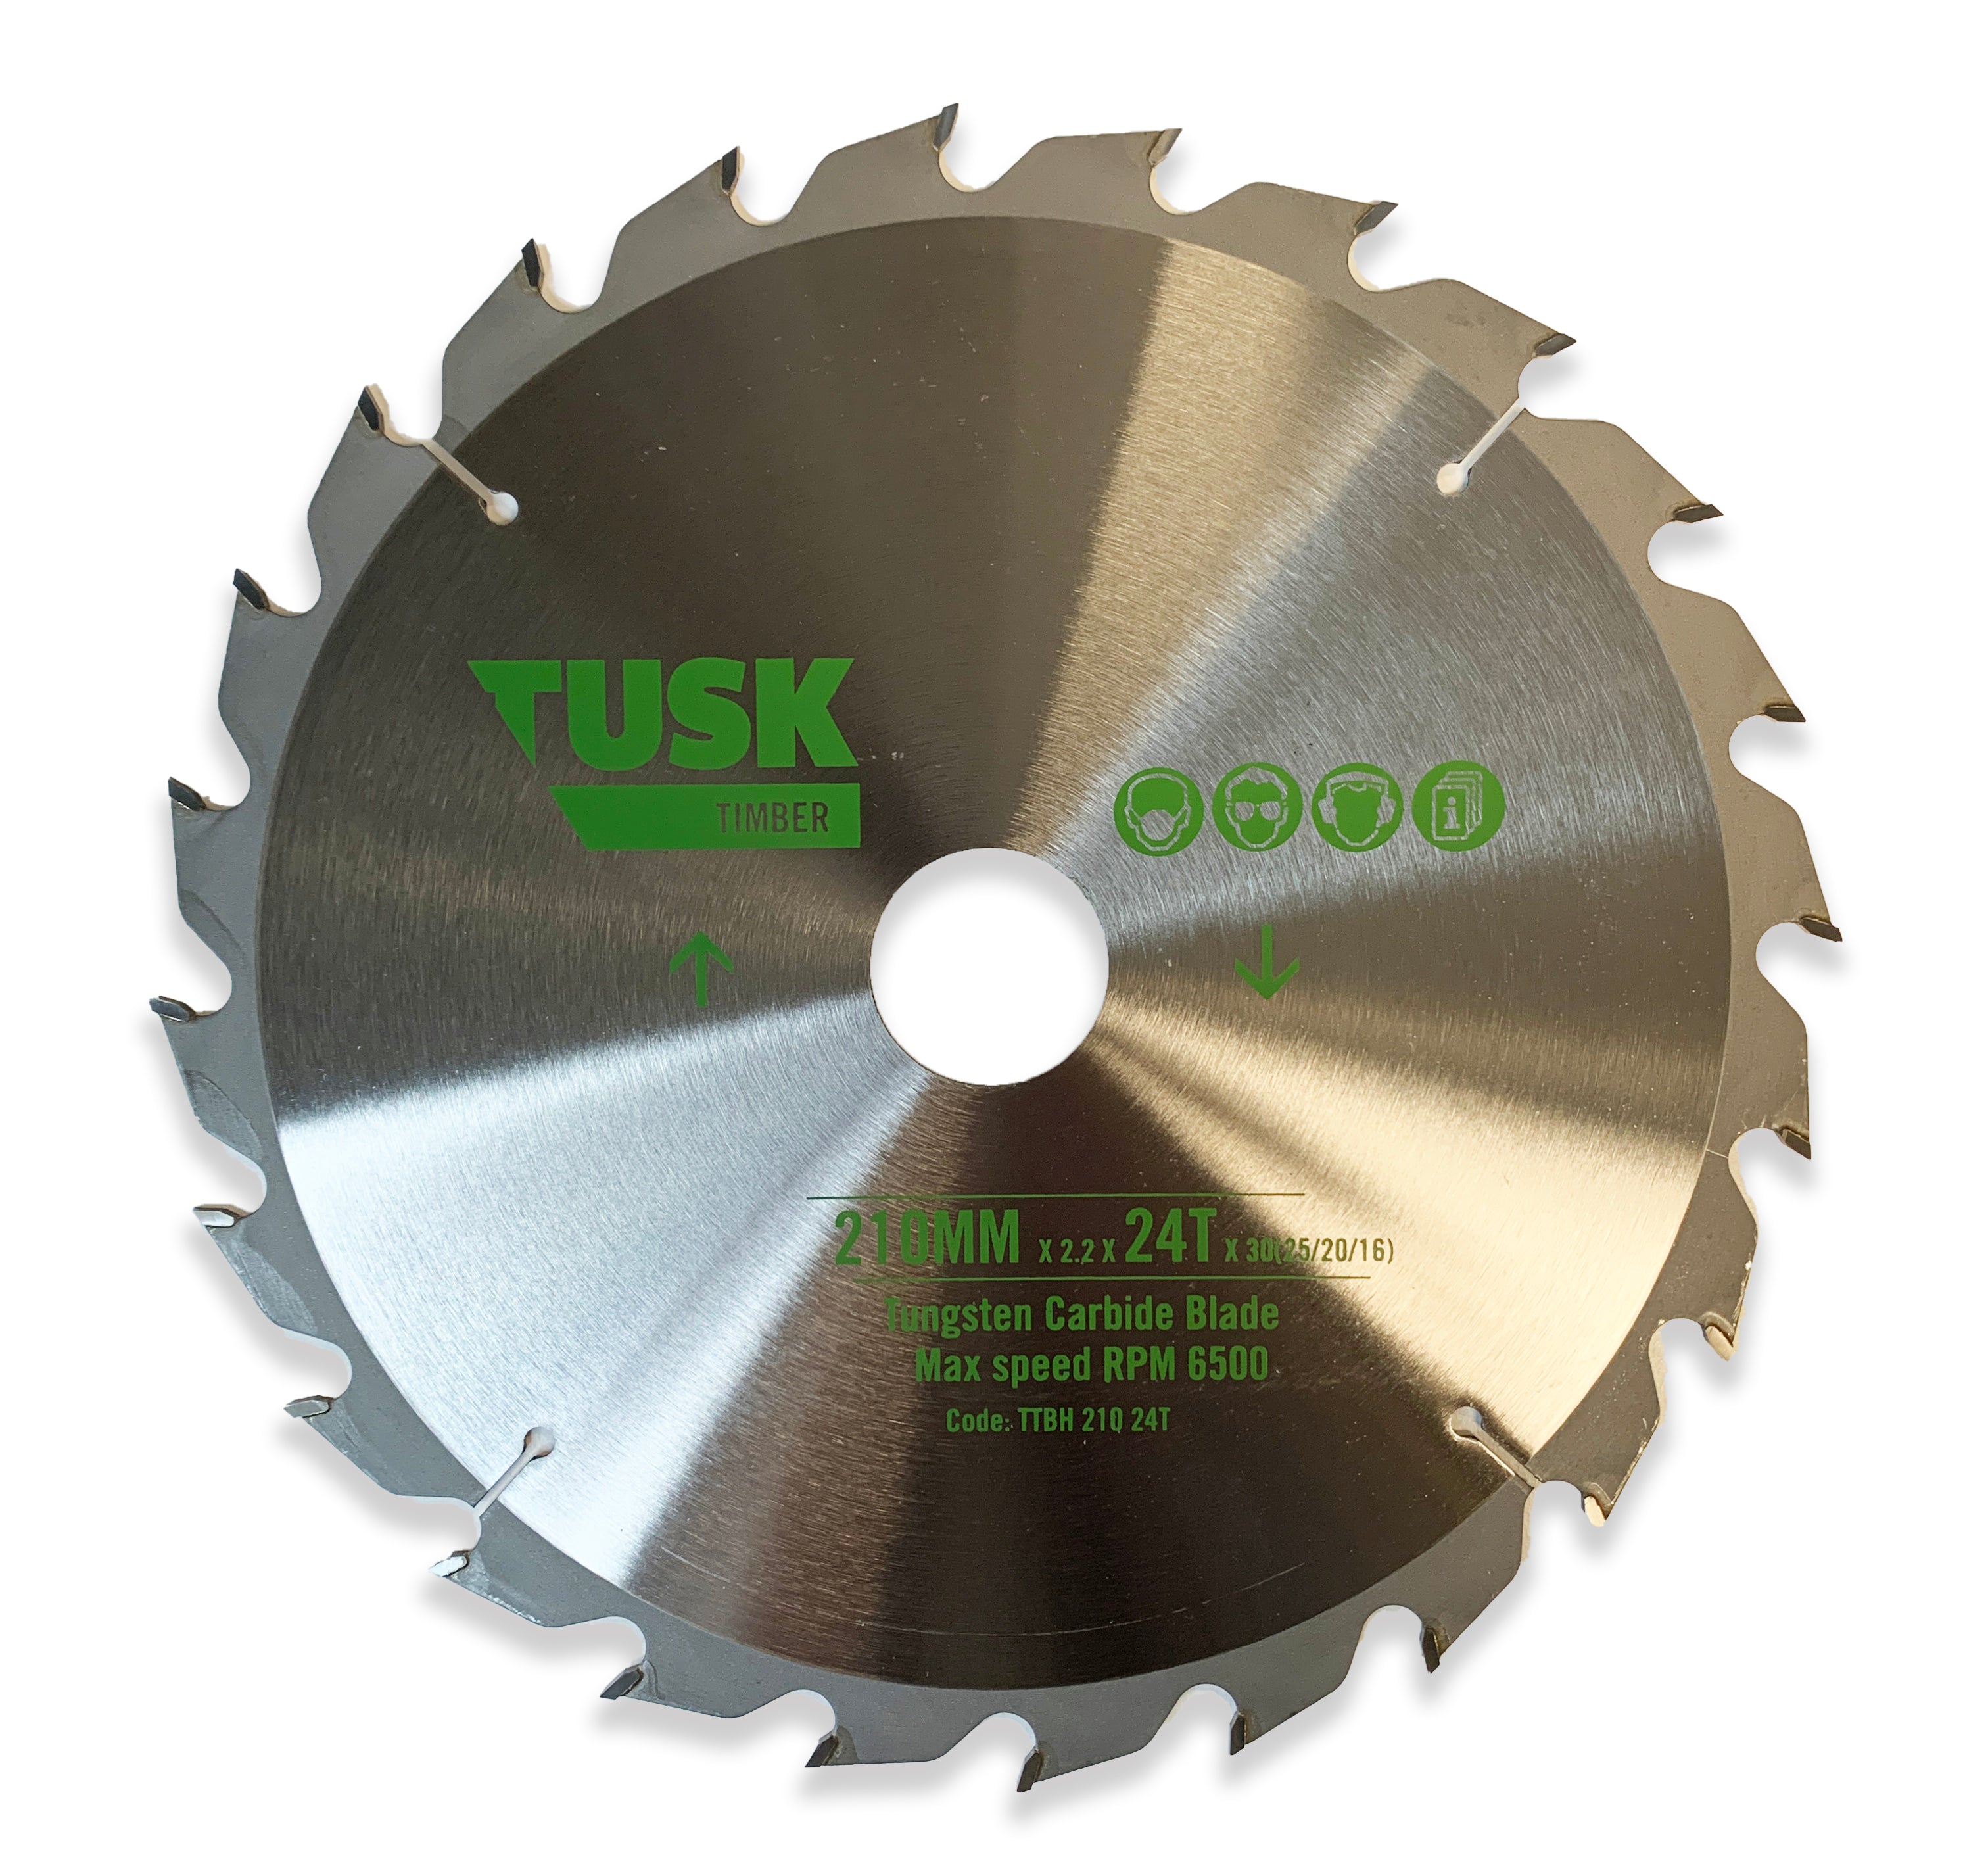 Tusk Timber Tungsten Carbide Blades - 165 X 2.0/1.2 X 40T X 20/16